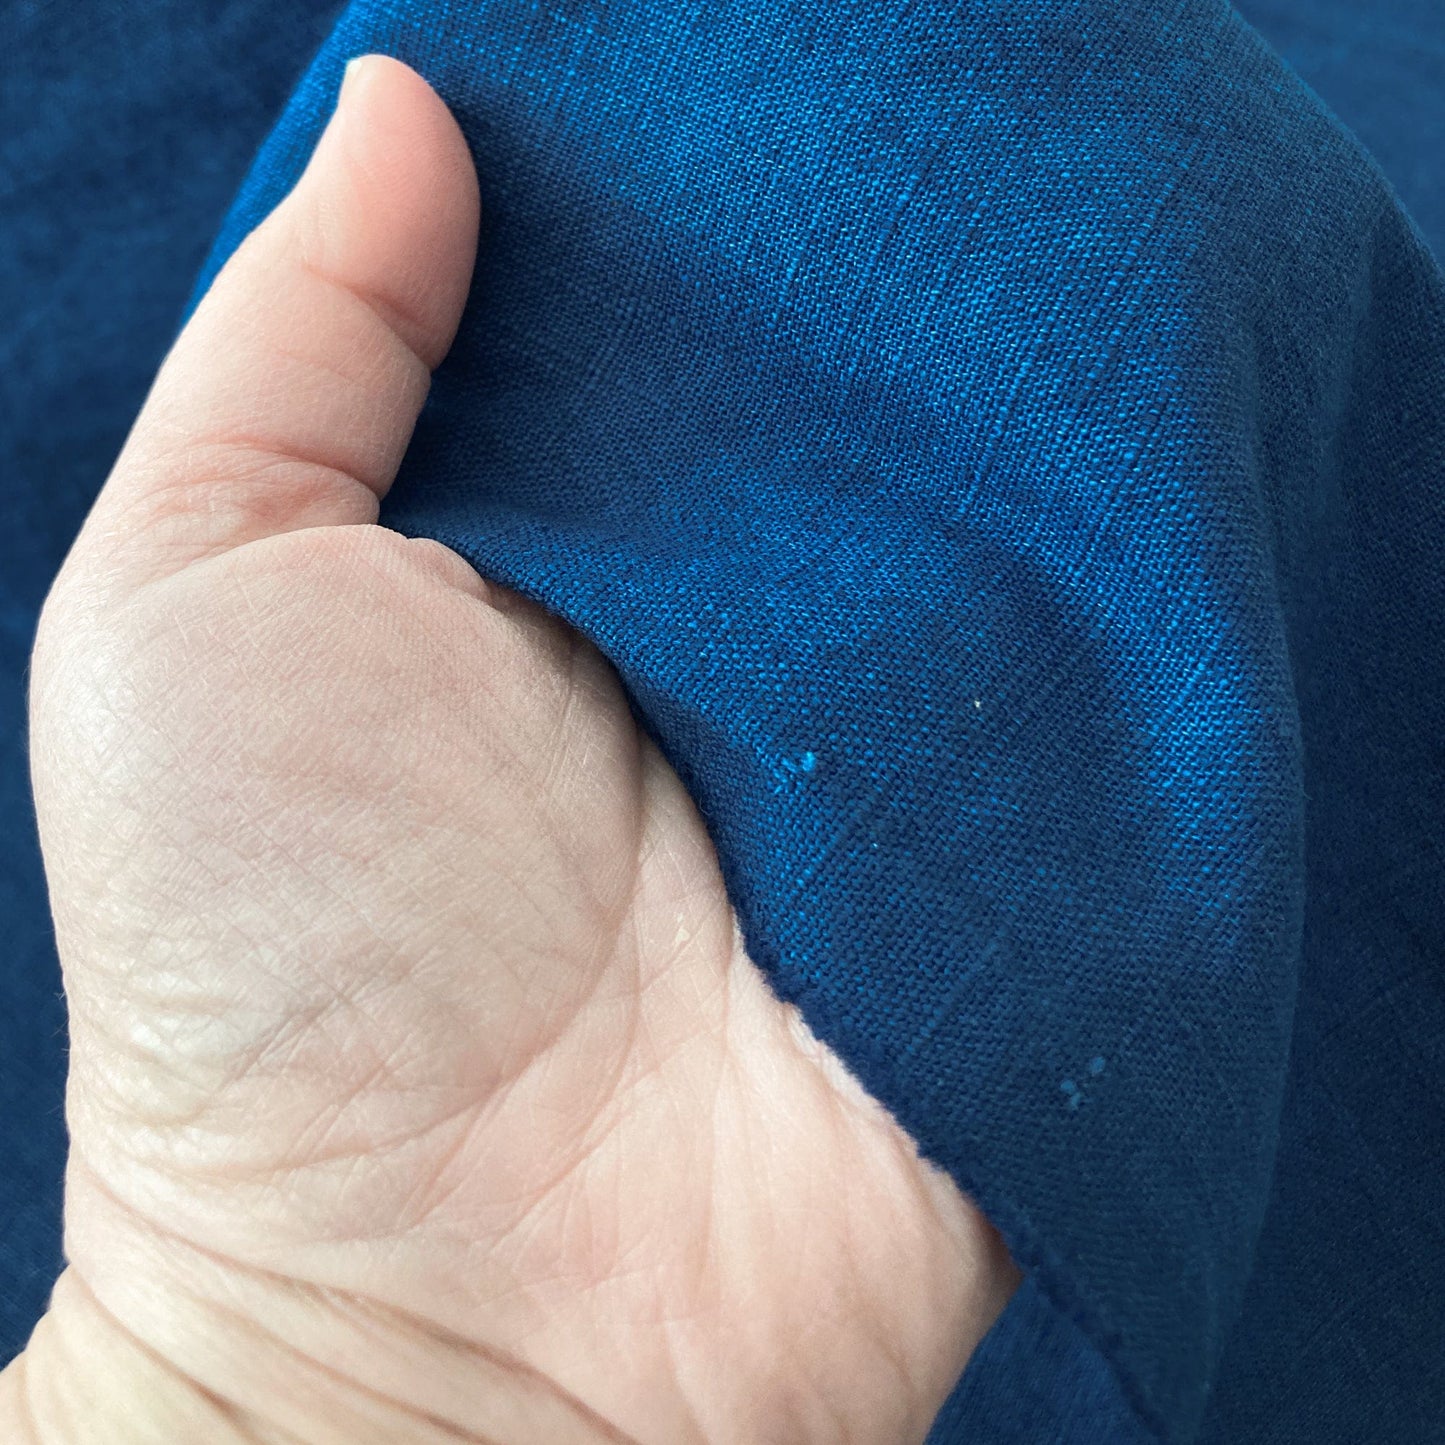 Washed Linen in Cobalt